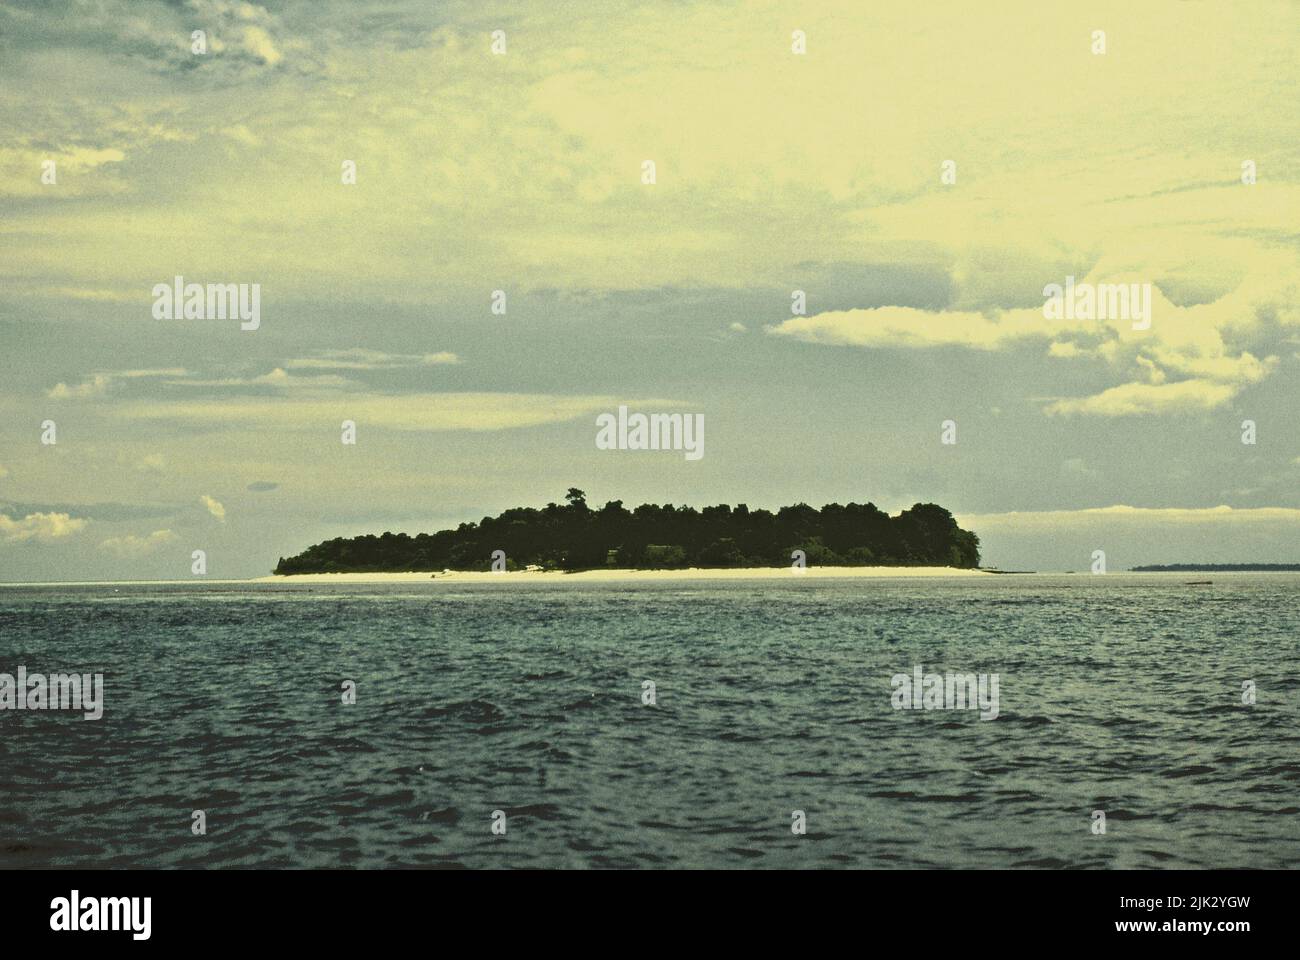 Sangalaki Island, a part of Berau Marine Protected Area, which lies within Derawan Islands in Berau, East Kalimantan, Indonesia. Stock Photo